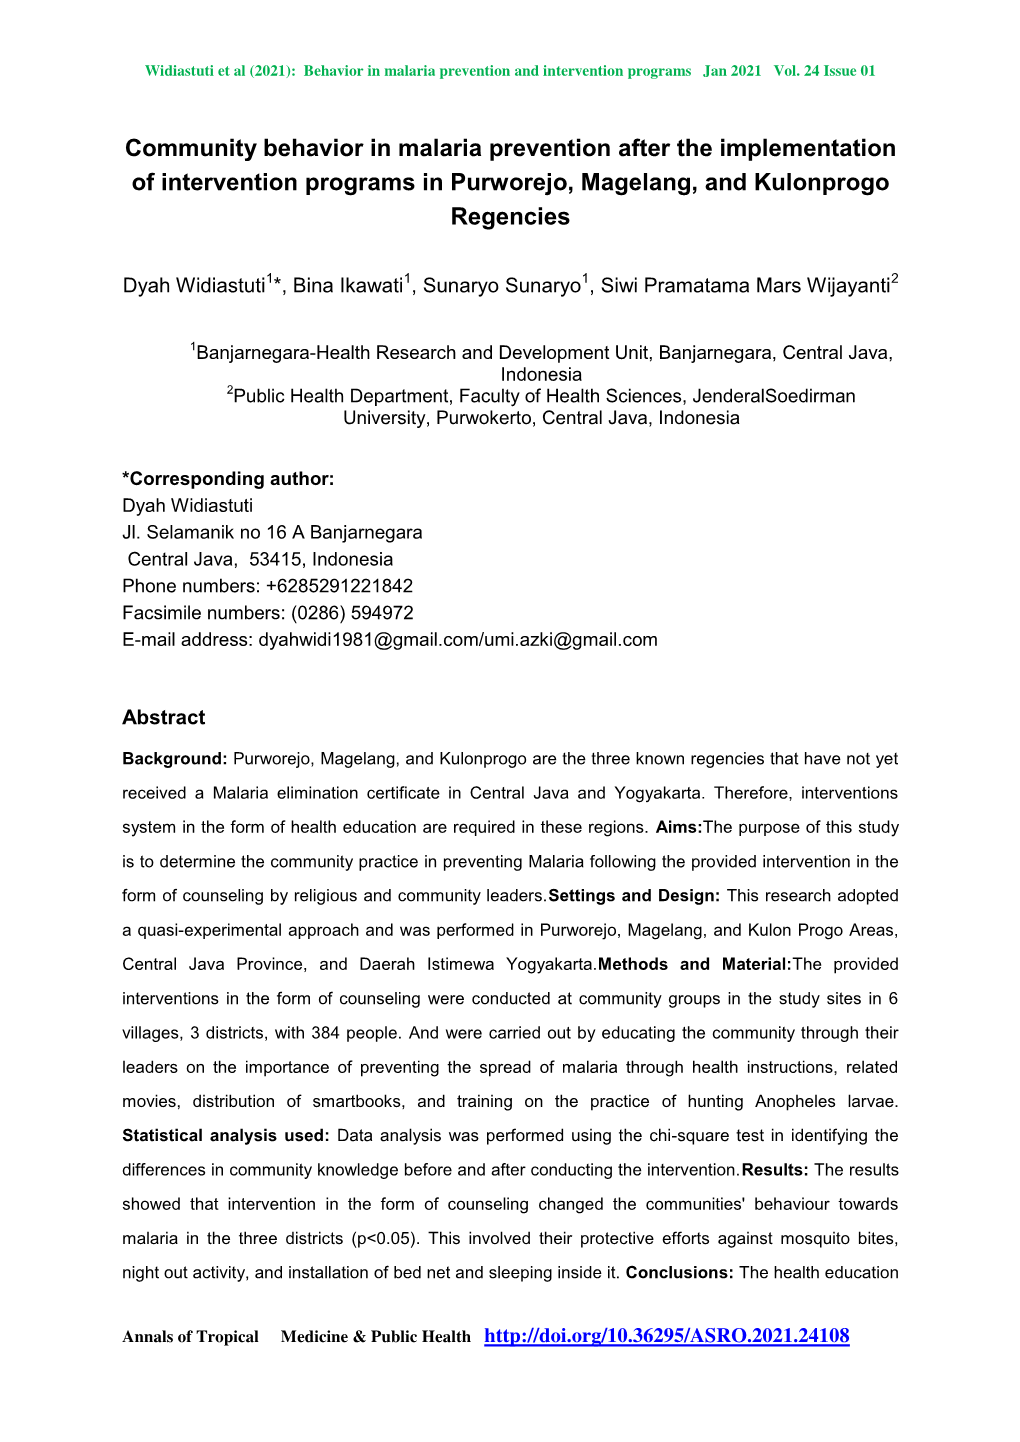 Community Behavior in Malaria Prevention After the Implementation of Intervention Programs in Purworejo, Magelang, and Kulonprogo Regencies